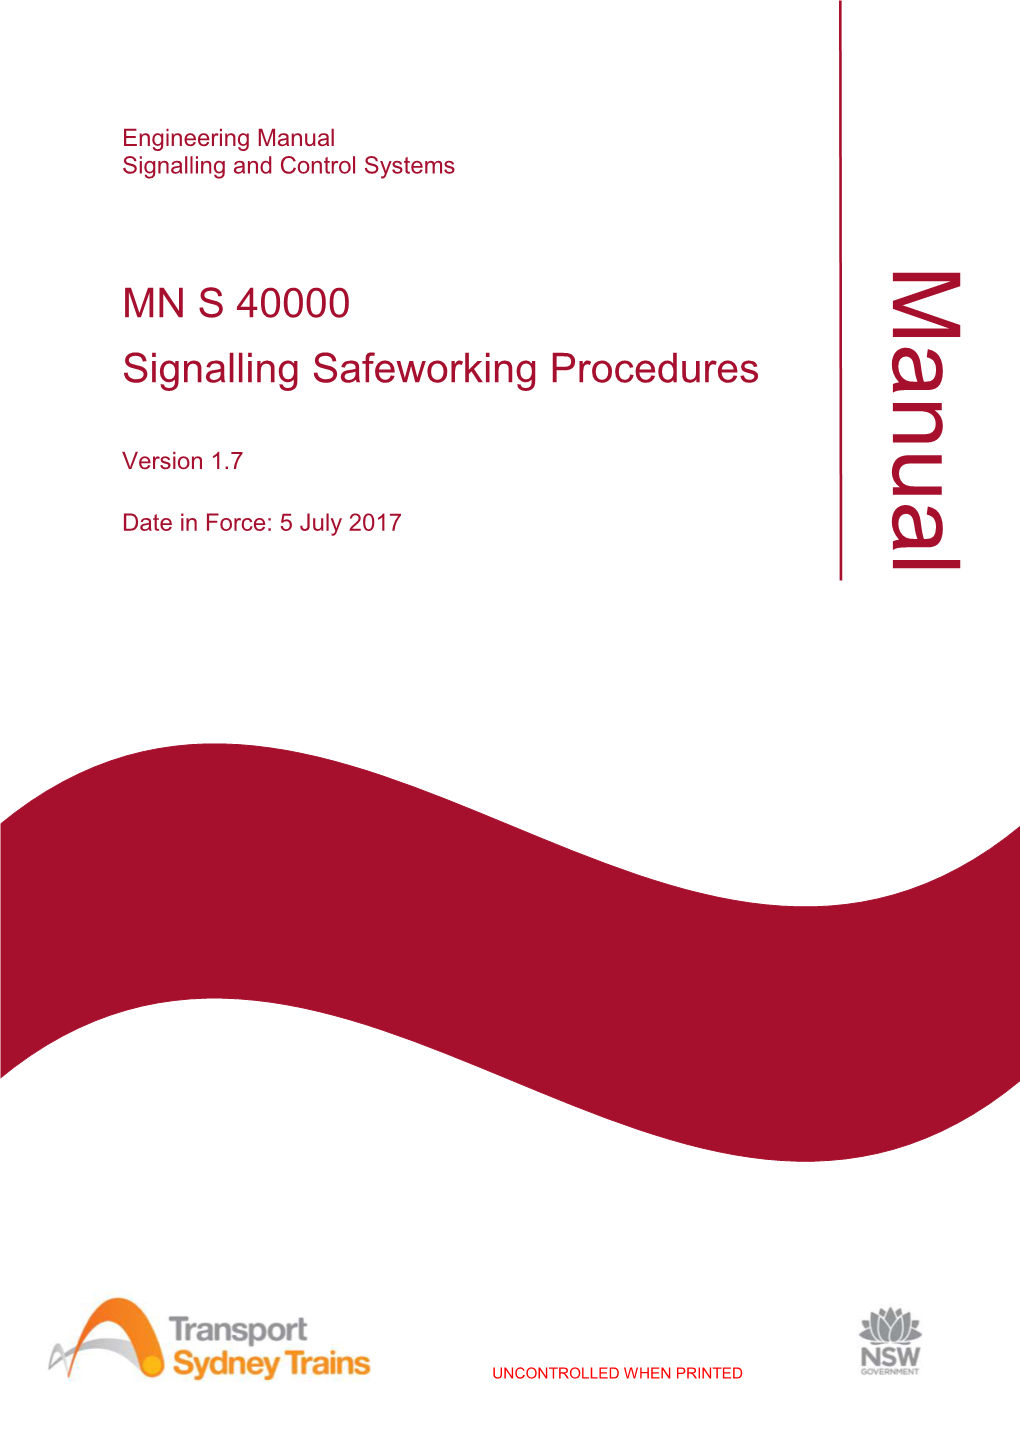 Signalling Safeworking Procedures